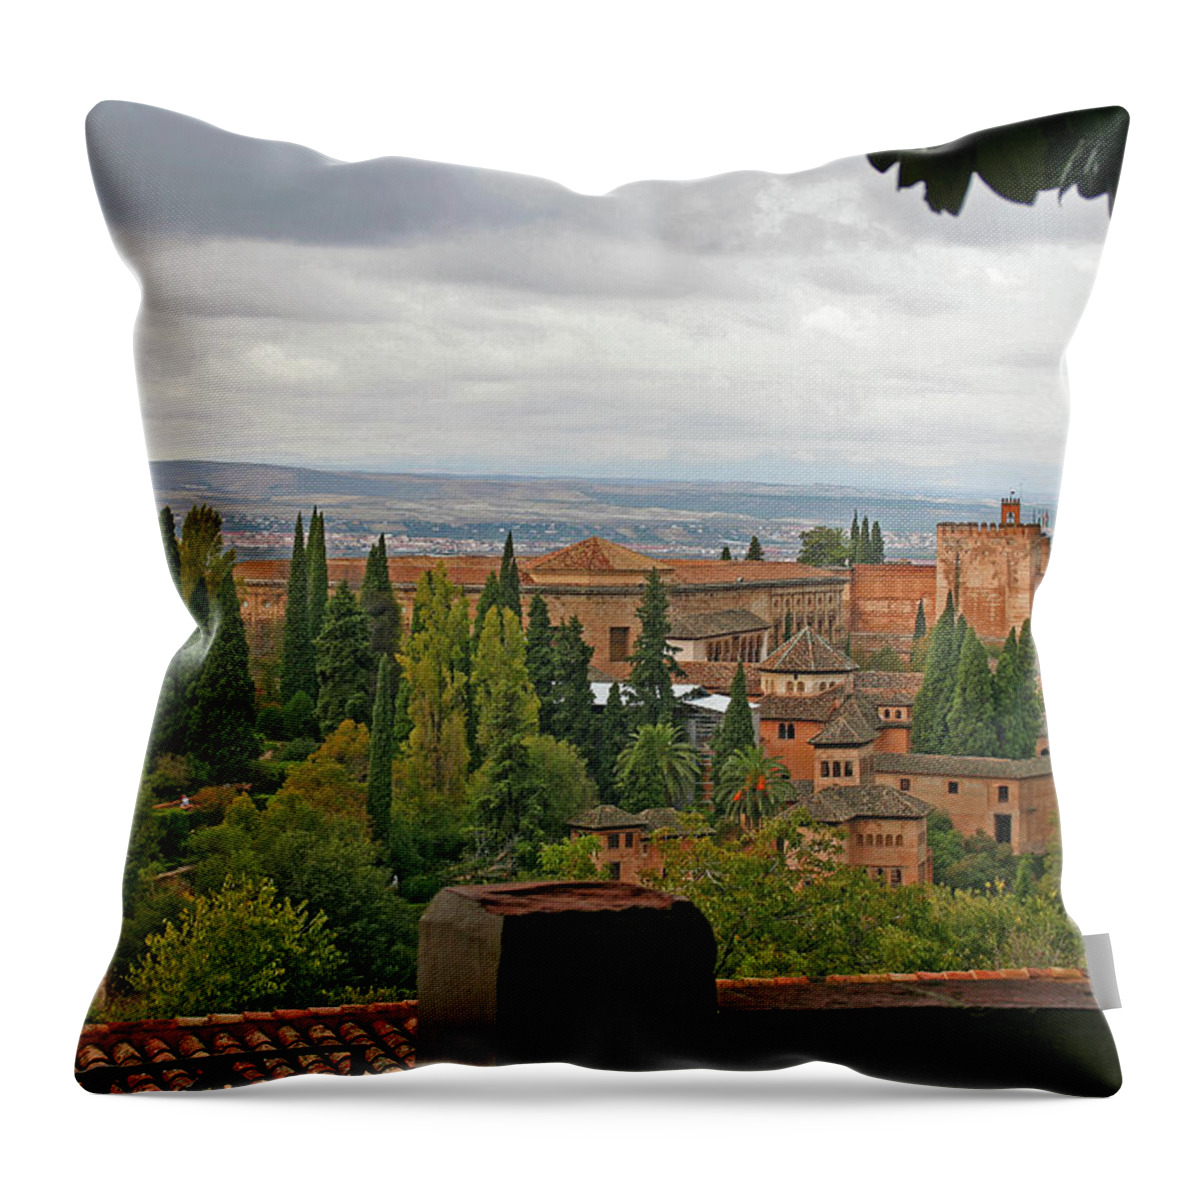 Granada Throw Pillow featuring the photograph Granada, Spain - Alhambra by Richard Krebs